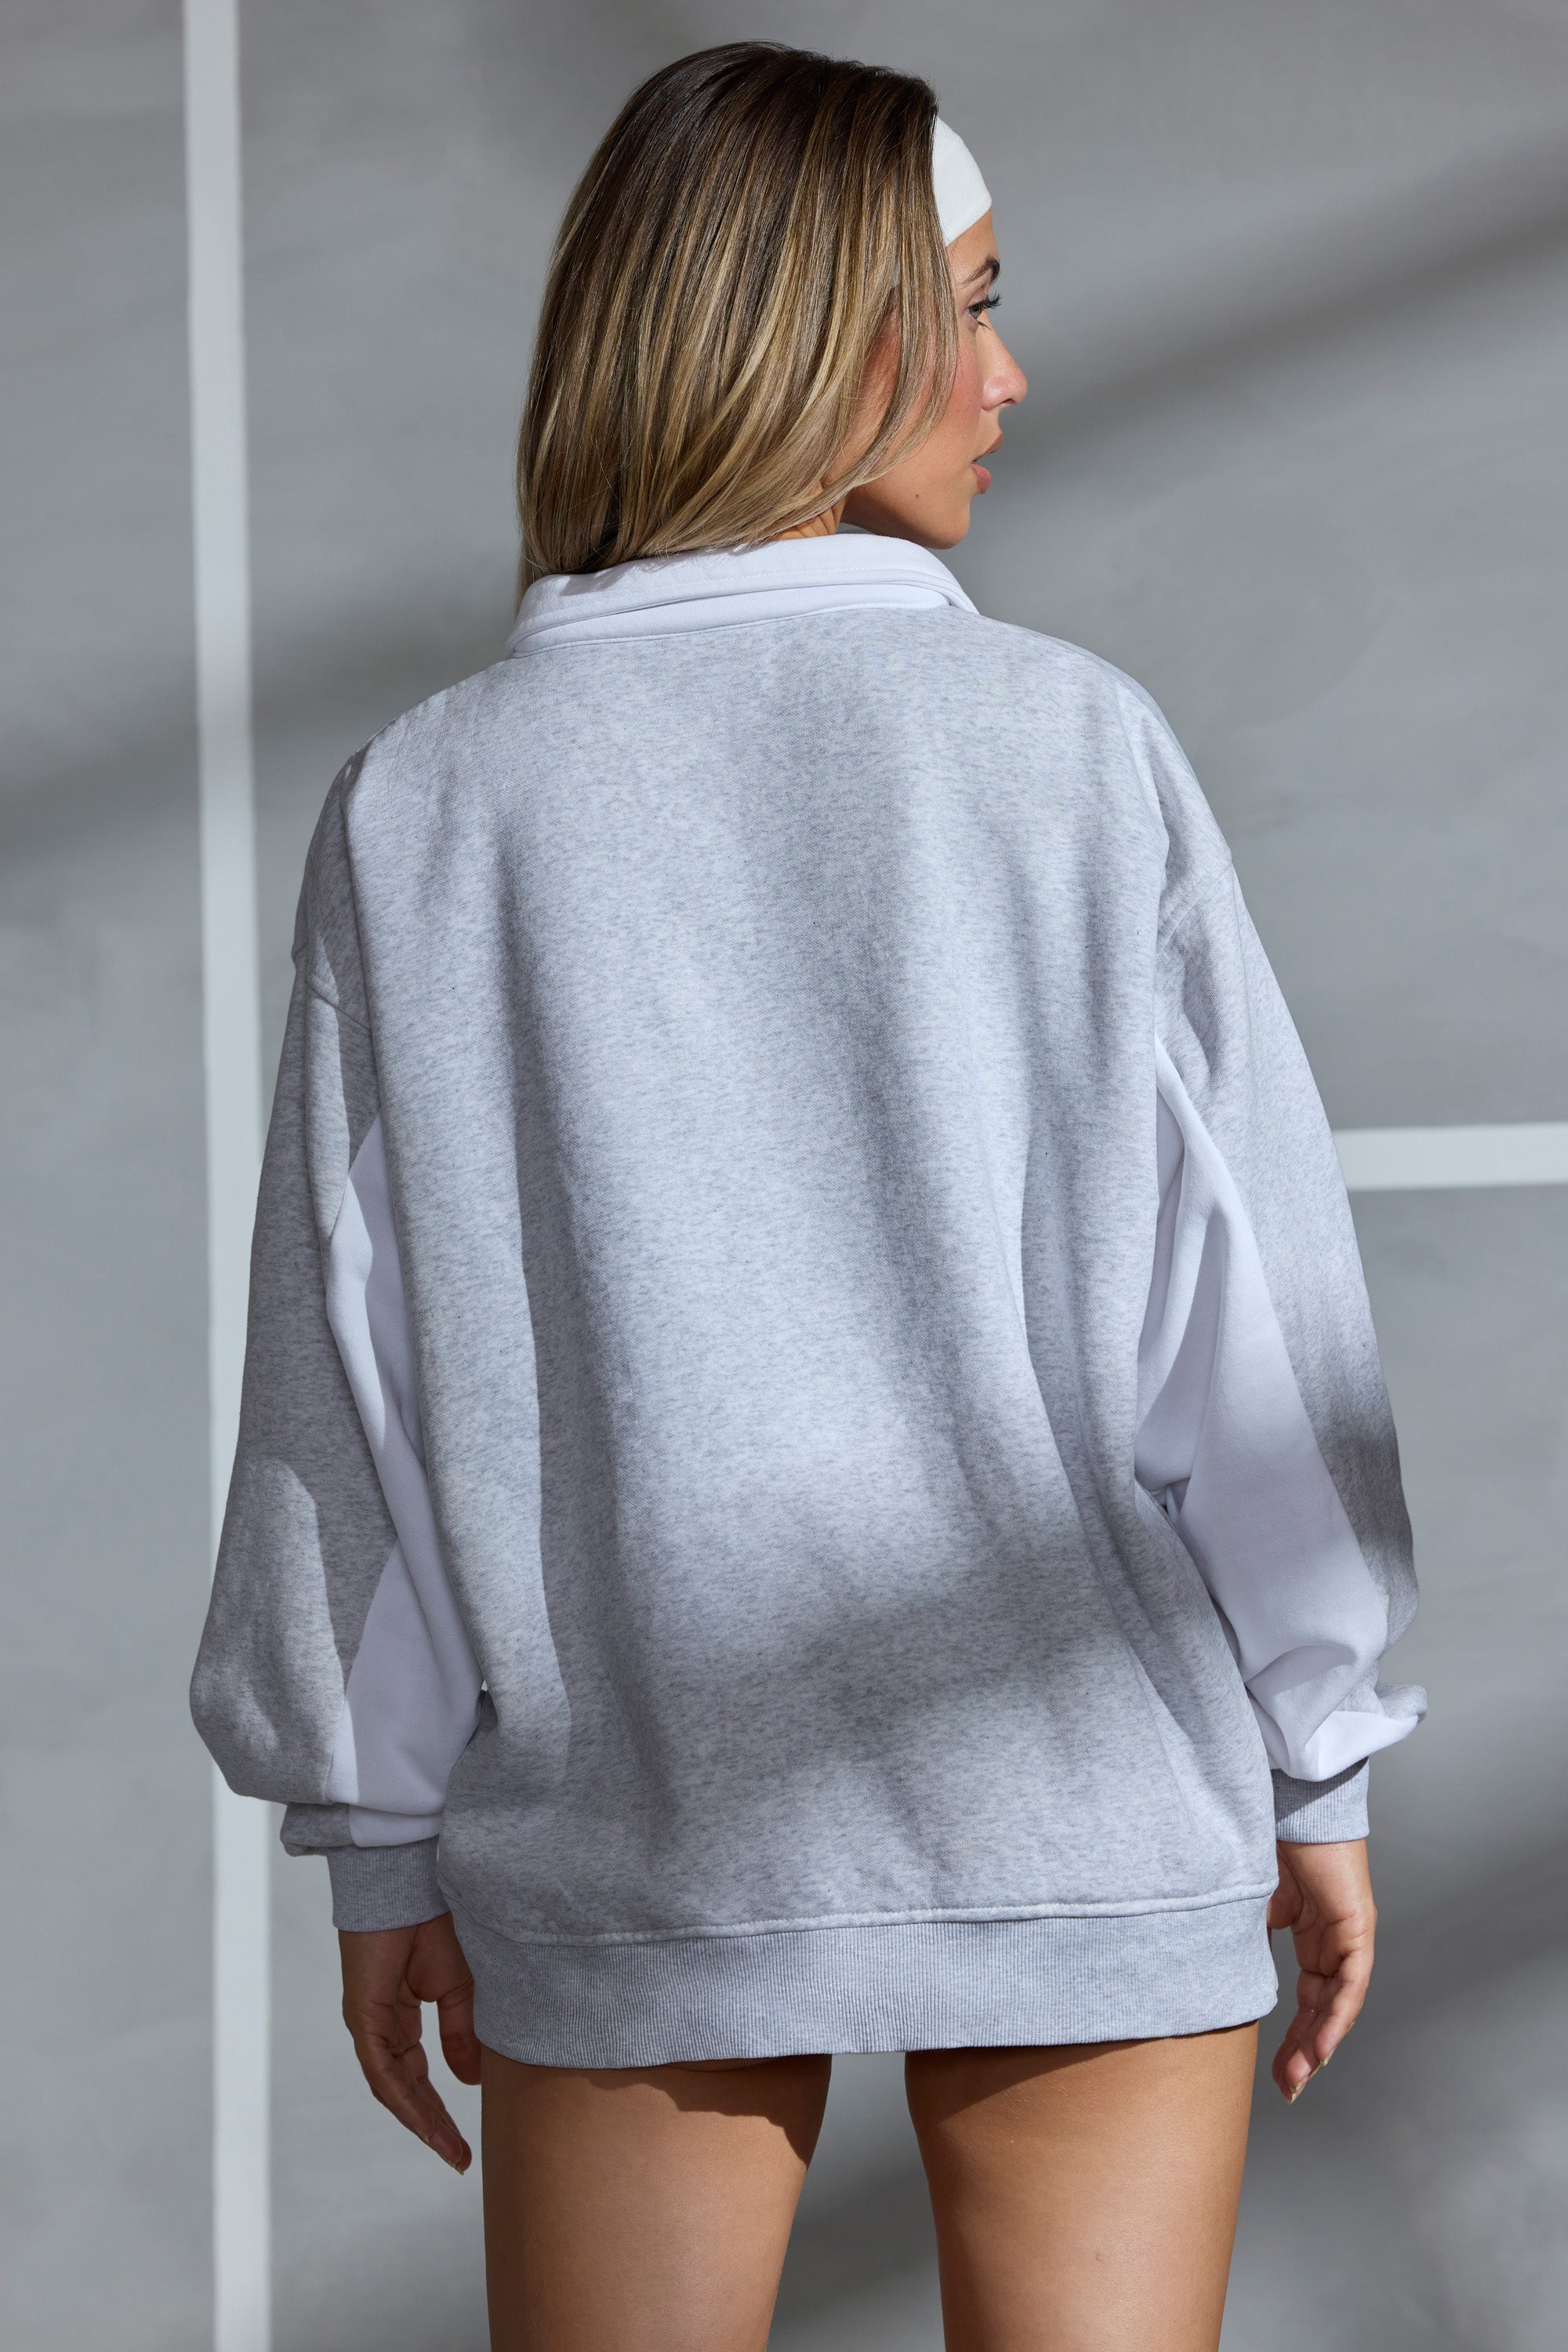 Athletic Oversized Half Zip Panel Sweatshirt in Marled Grey